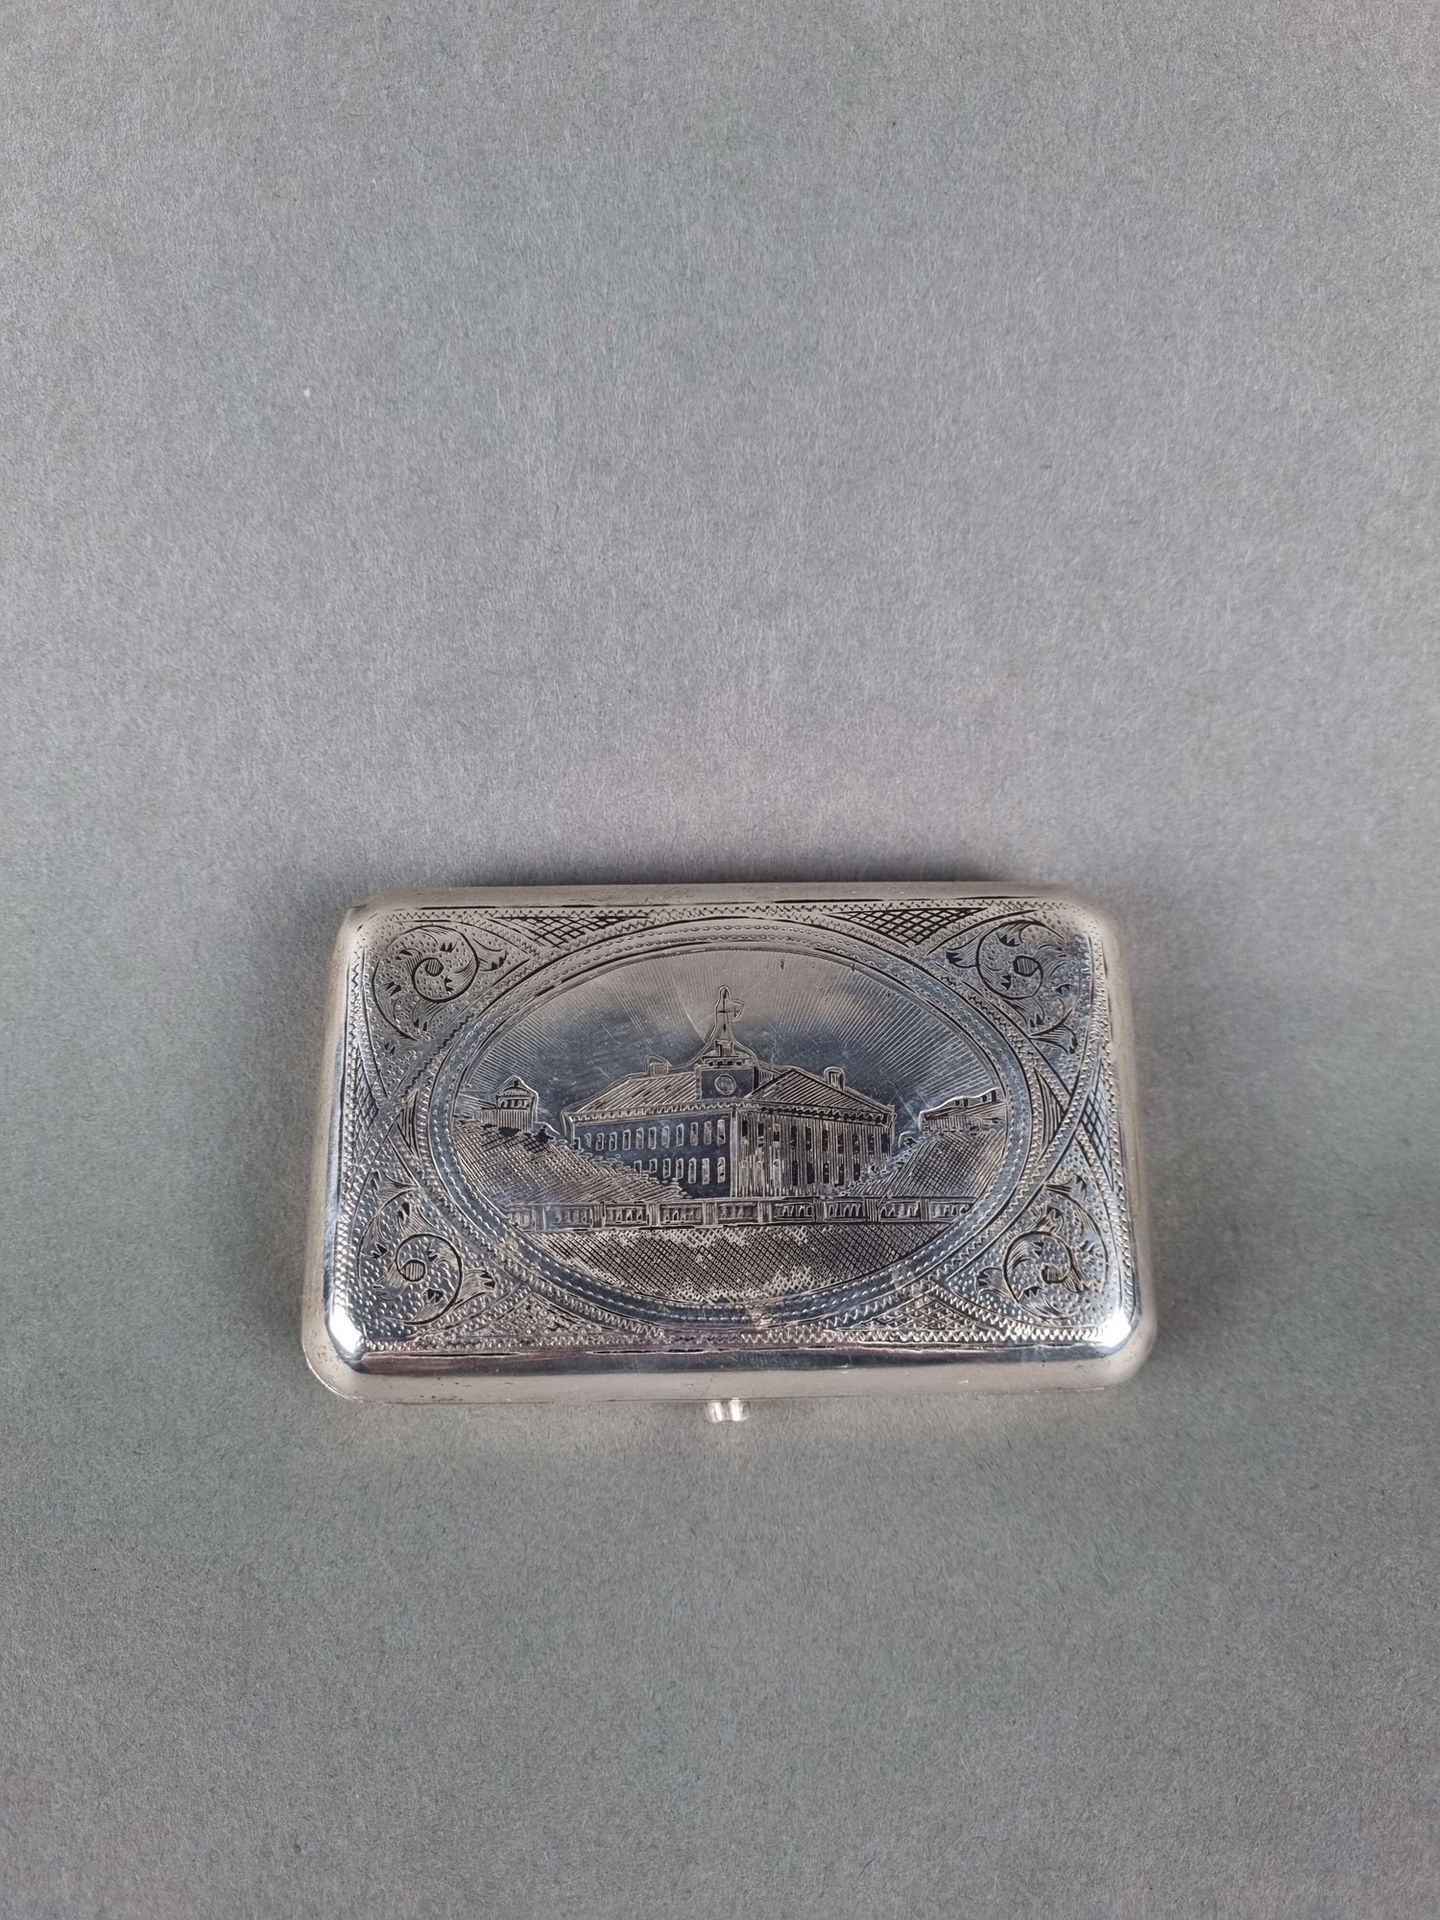 Null Scatola d'argento incisa, marchio di Mosca. 10x6x2 cm